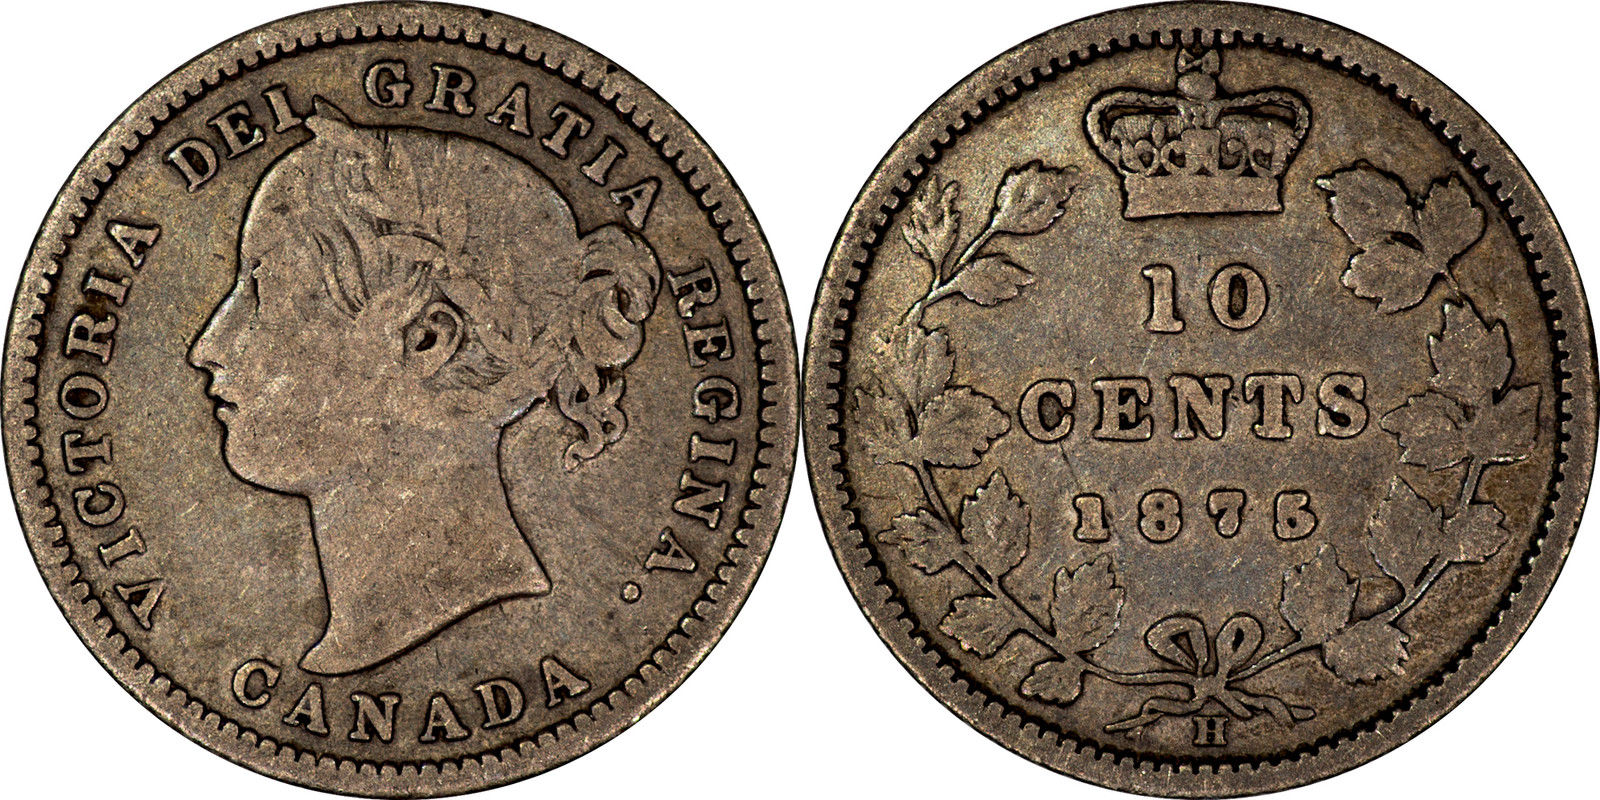 Canada - 1875 H 10 Cents.jpg